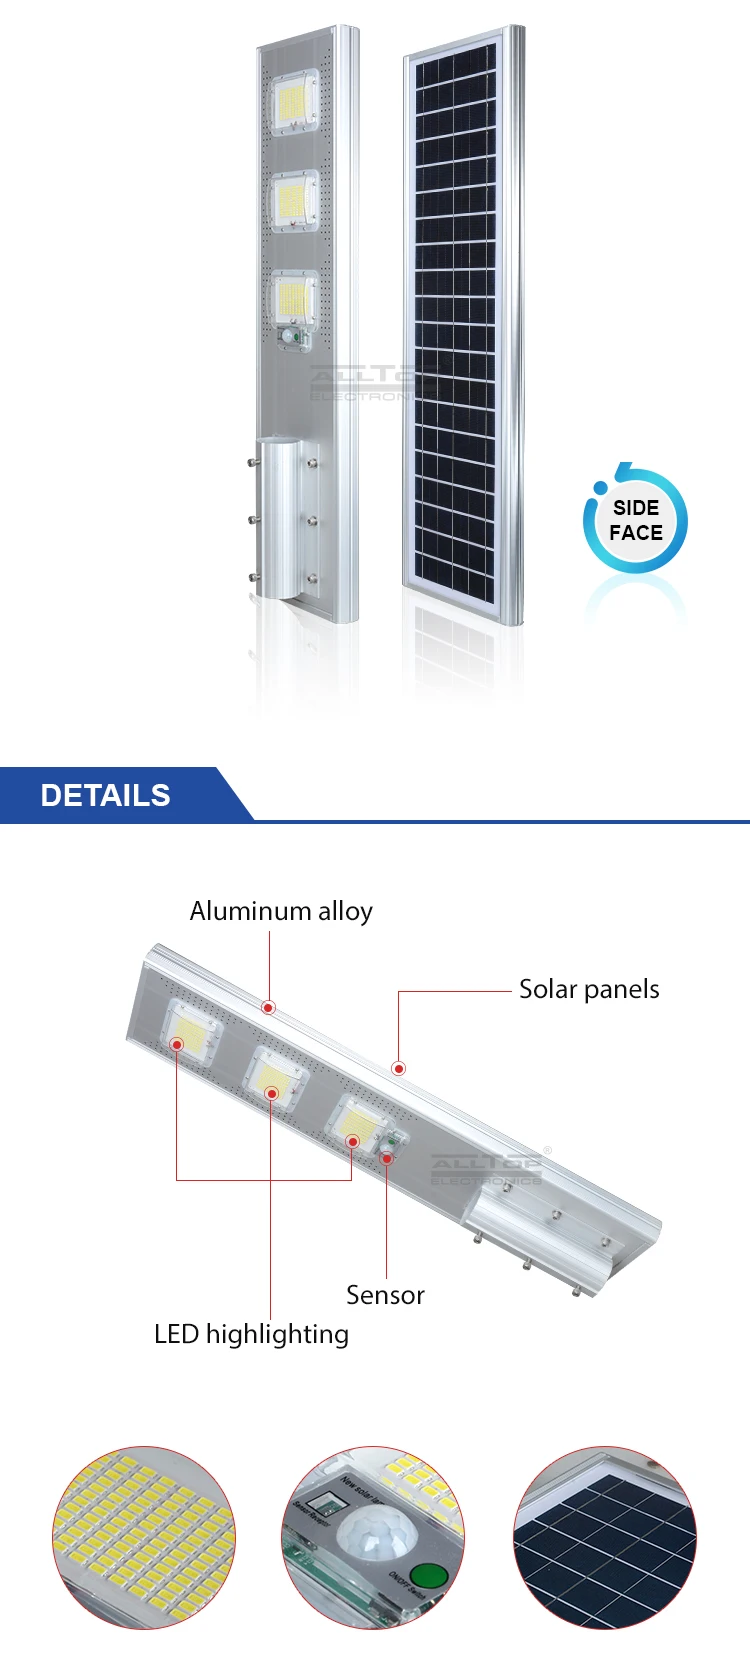 ALLTOP High quality die cast aluminum ip66 waterproof garden road 60 120 180 watt all in one led solar street light